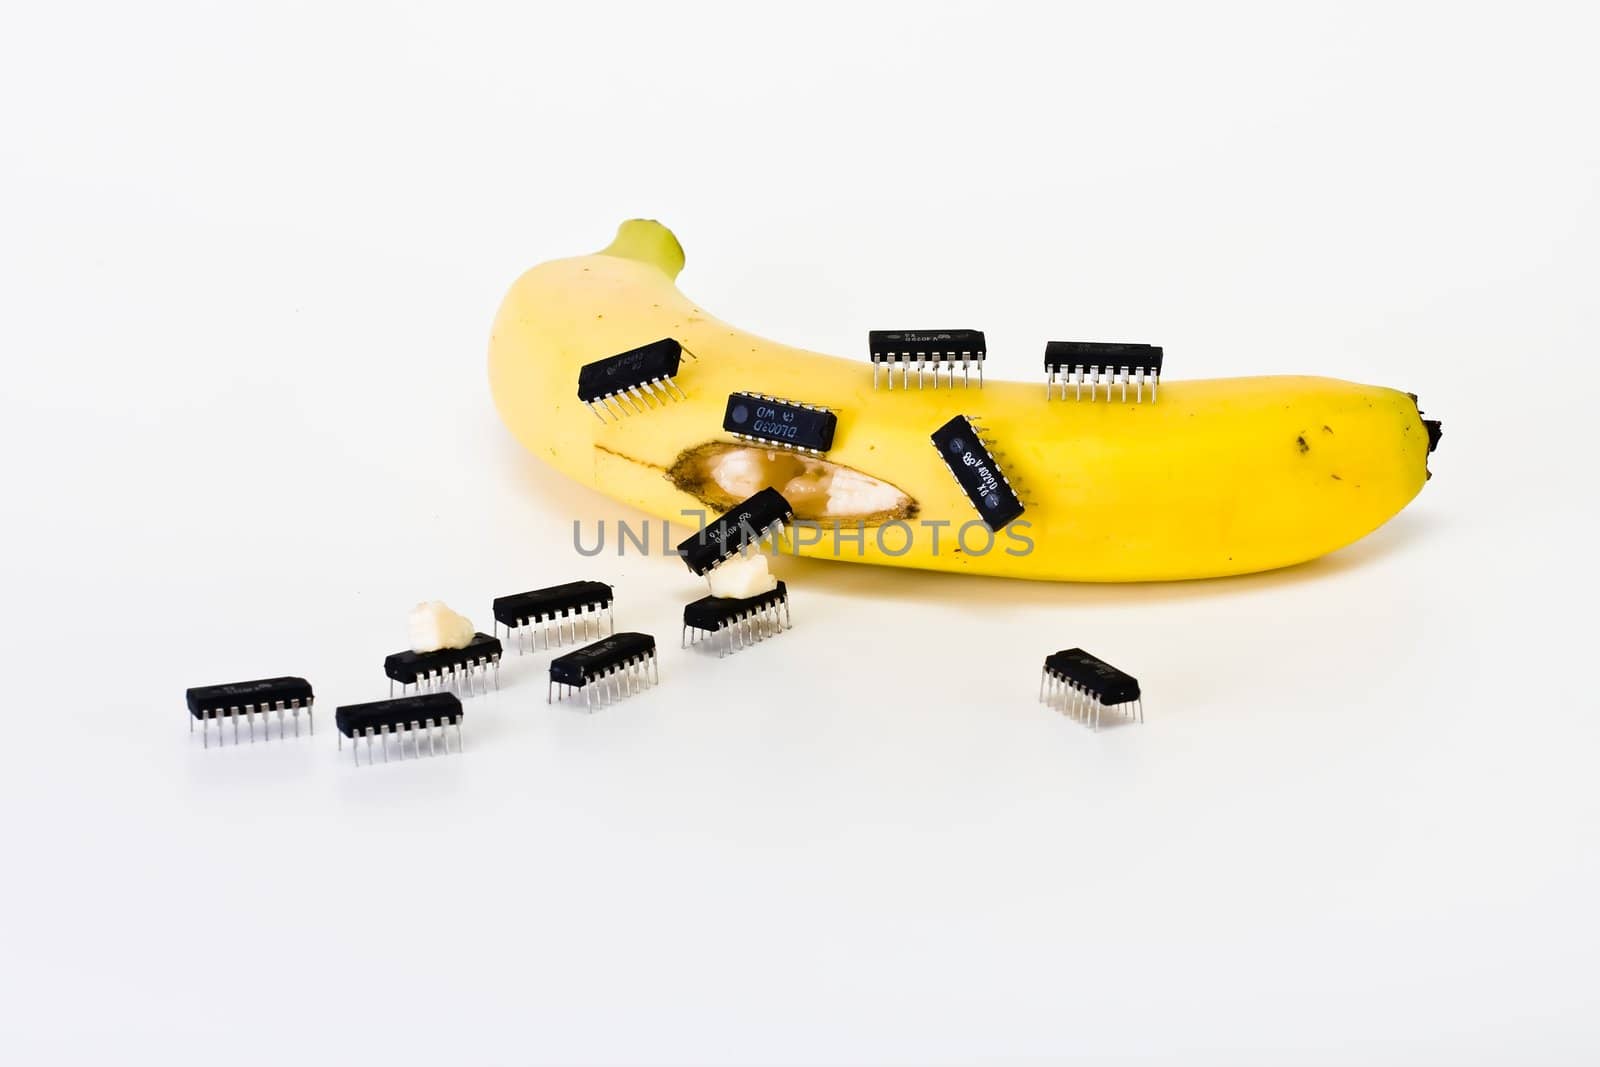 Computer chips crawling around banana